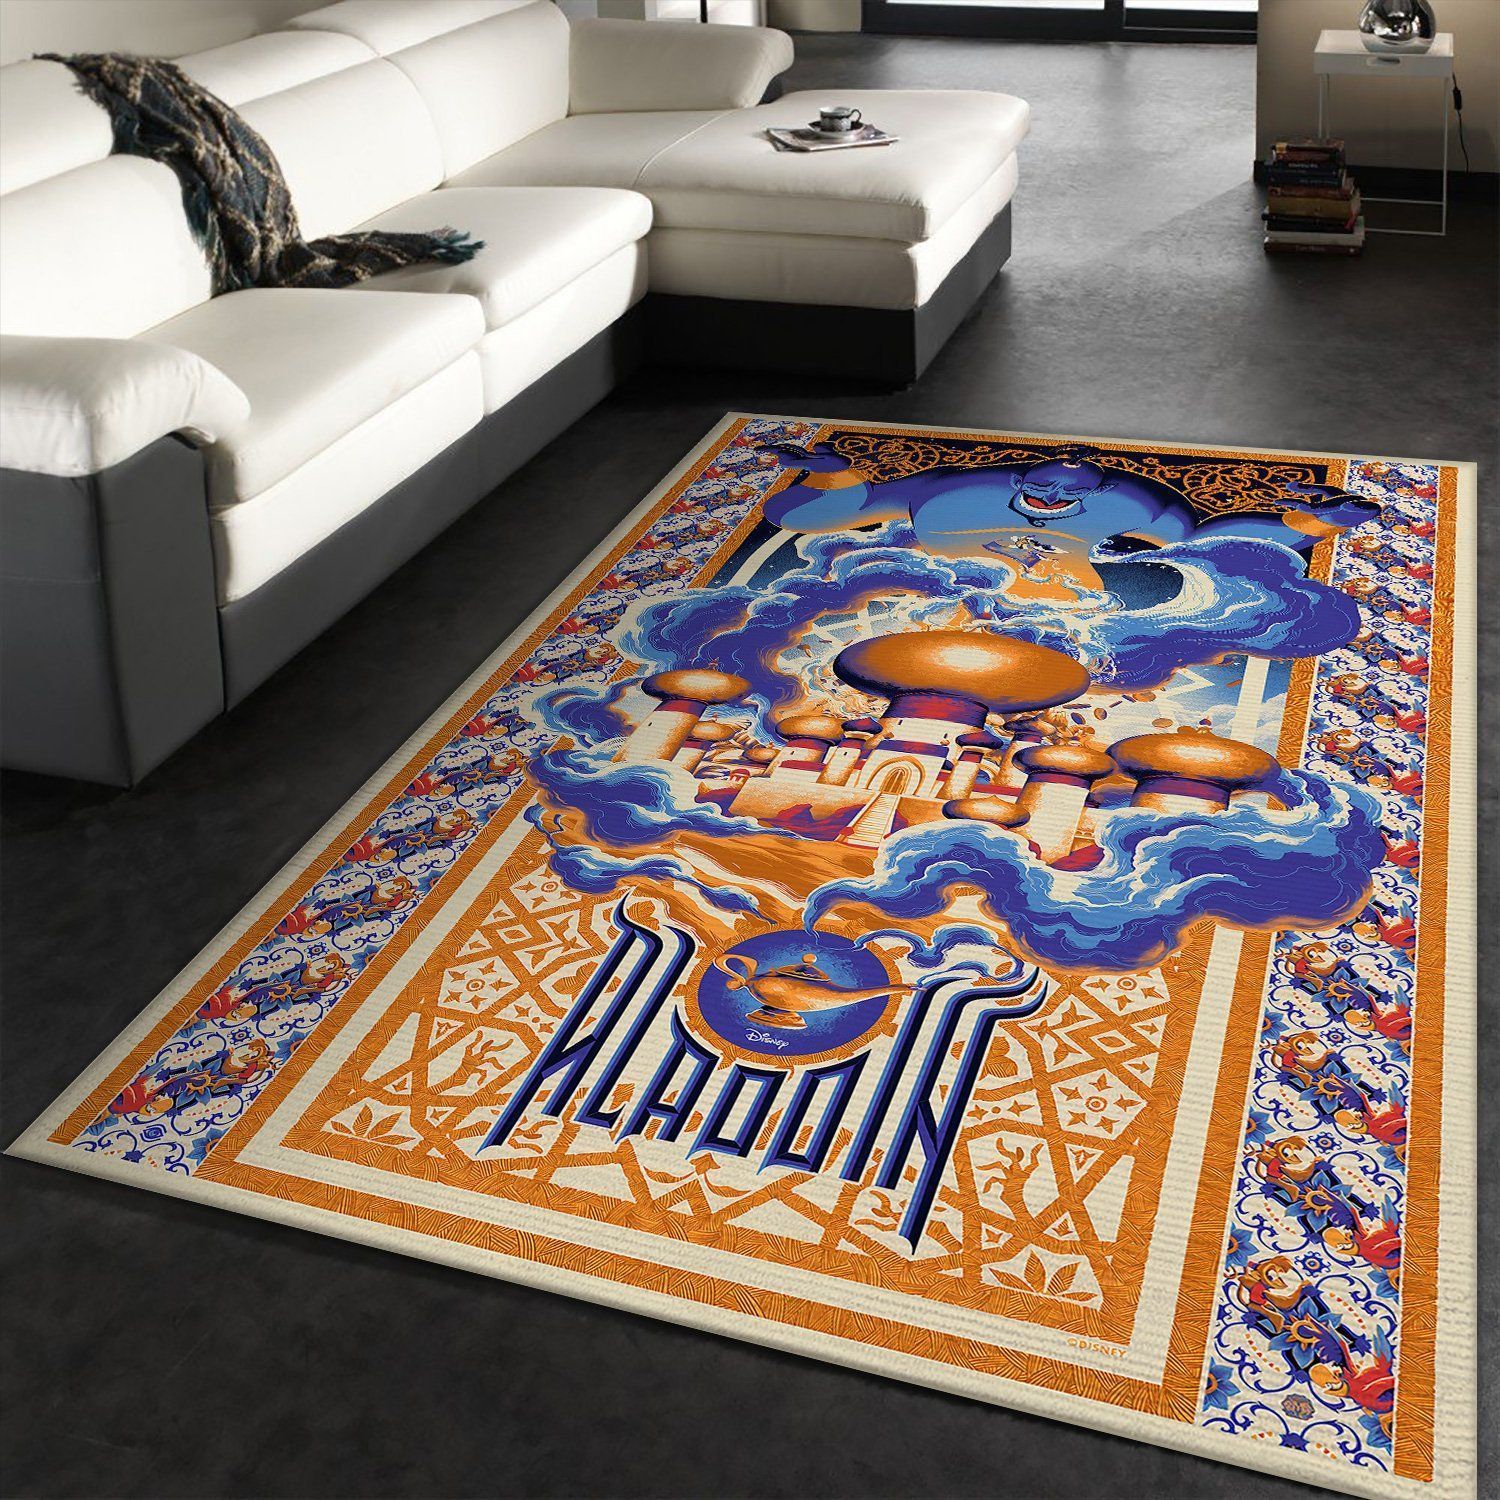 Aladdin Disney Movies Area Rugs Living Room Carpet Floor Decor The US D cor - Indoor Outdoor Rugs 1